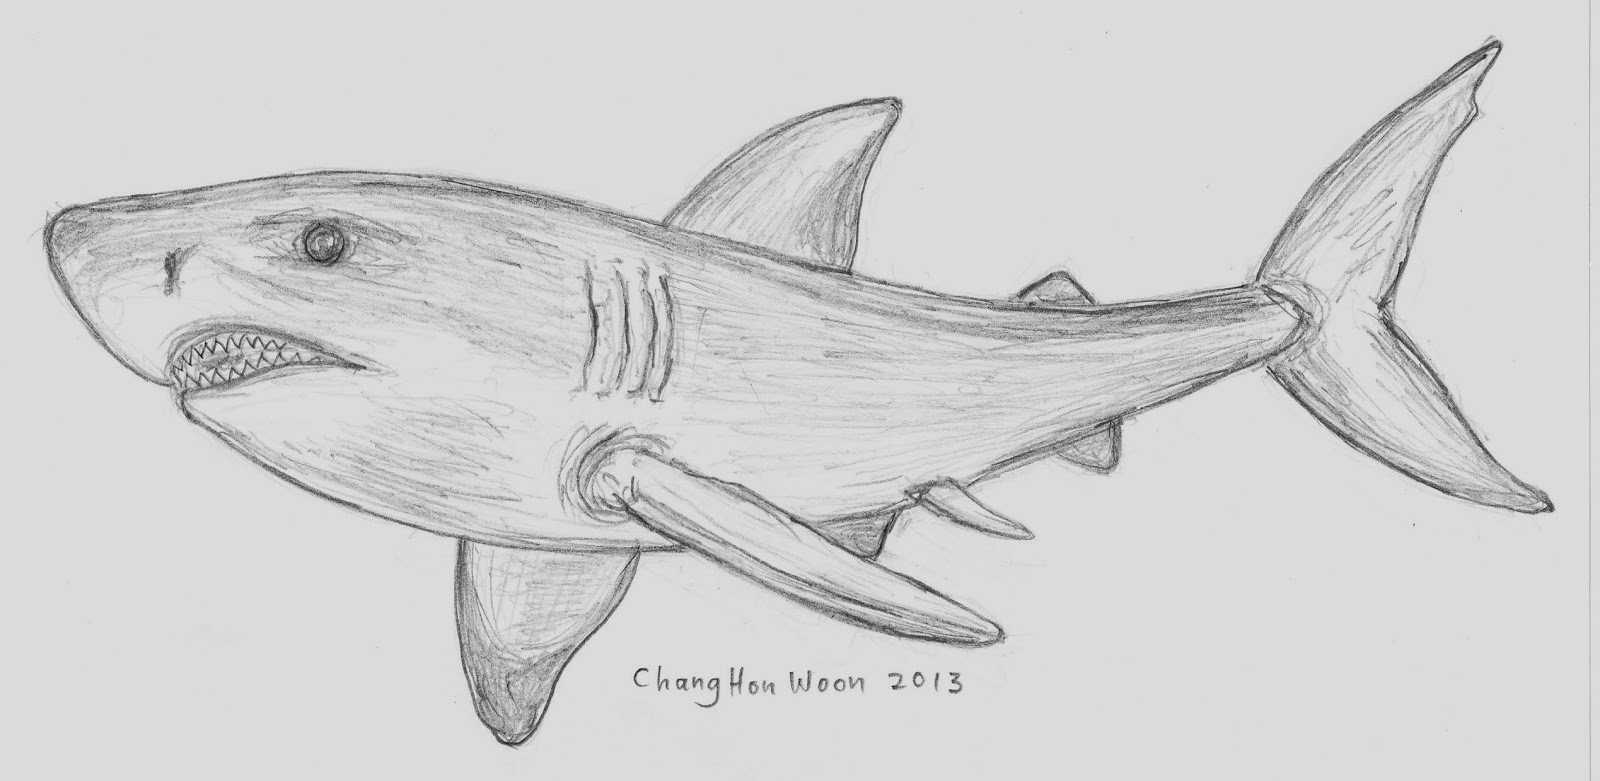 Рисунок акулы для срисовки. Акула карандашом. Акула для срисовки. Рисунок акулы карандашом для срисовки. Акула карандашом для срисовки.